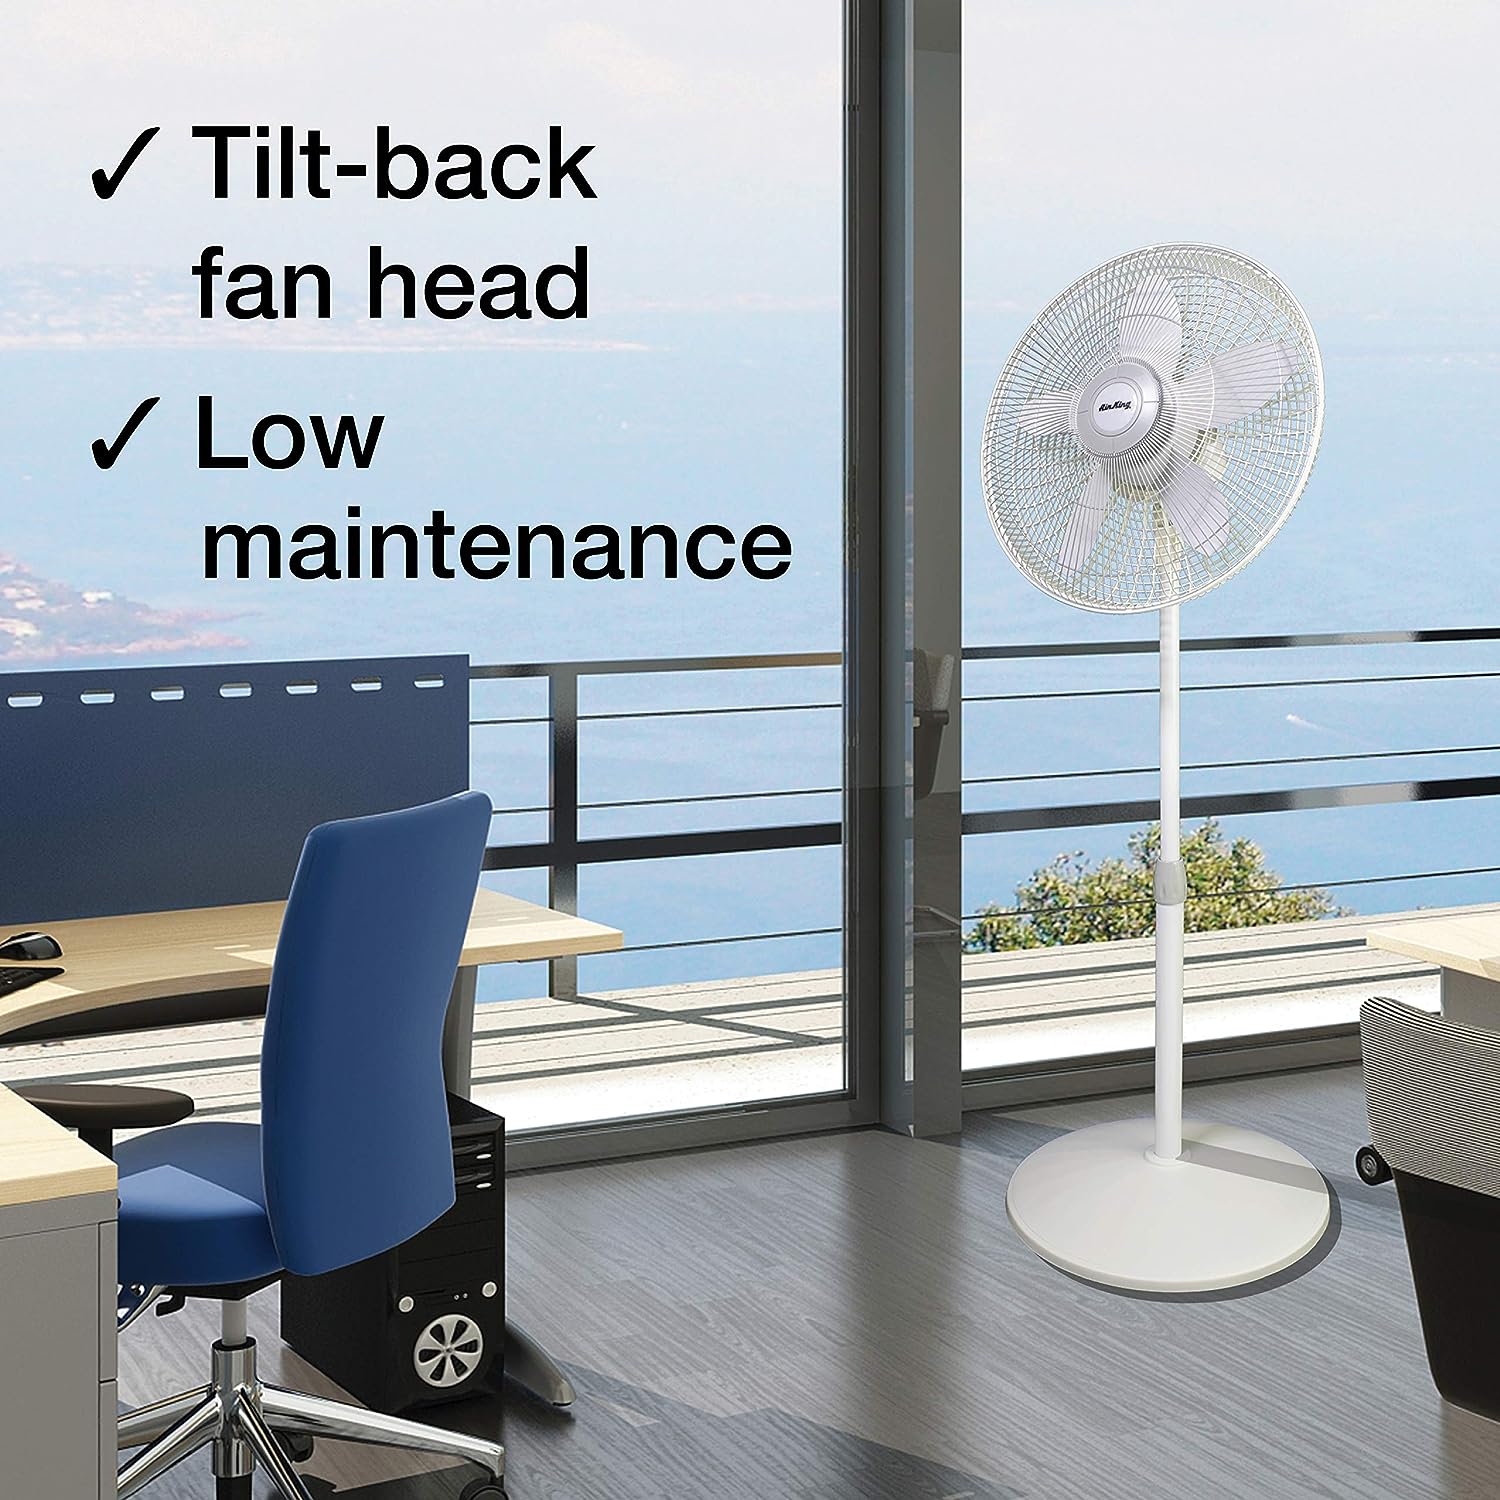 Industrial Grade Pedestal Fans - Air King Oscillating Fan